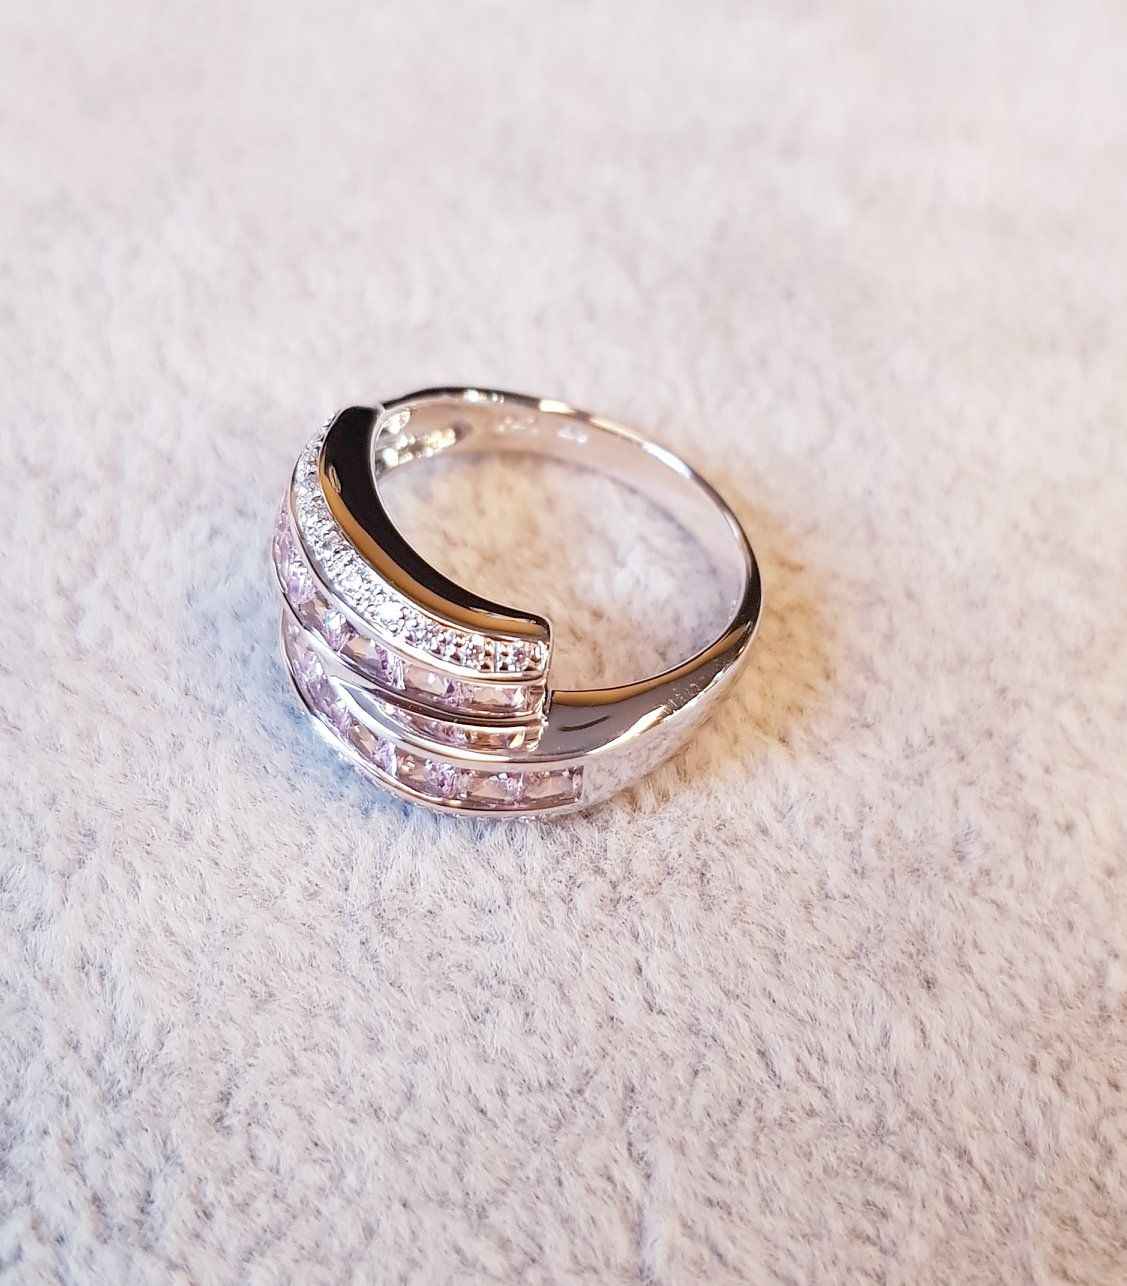 Shank Simulated Morganite with Simulated Diamond Ring